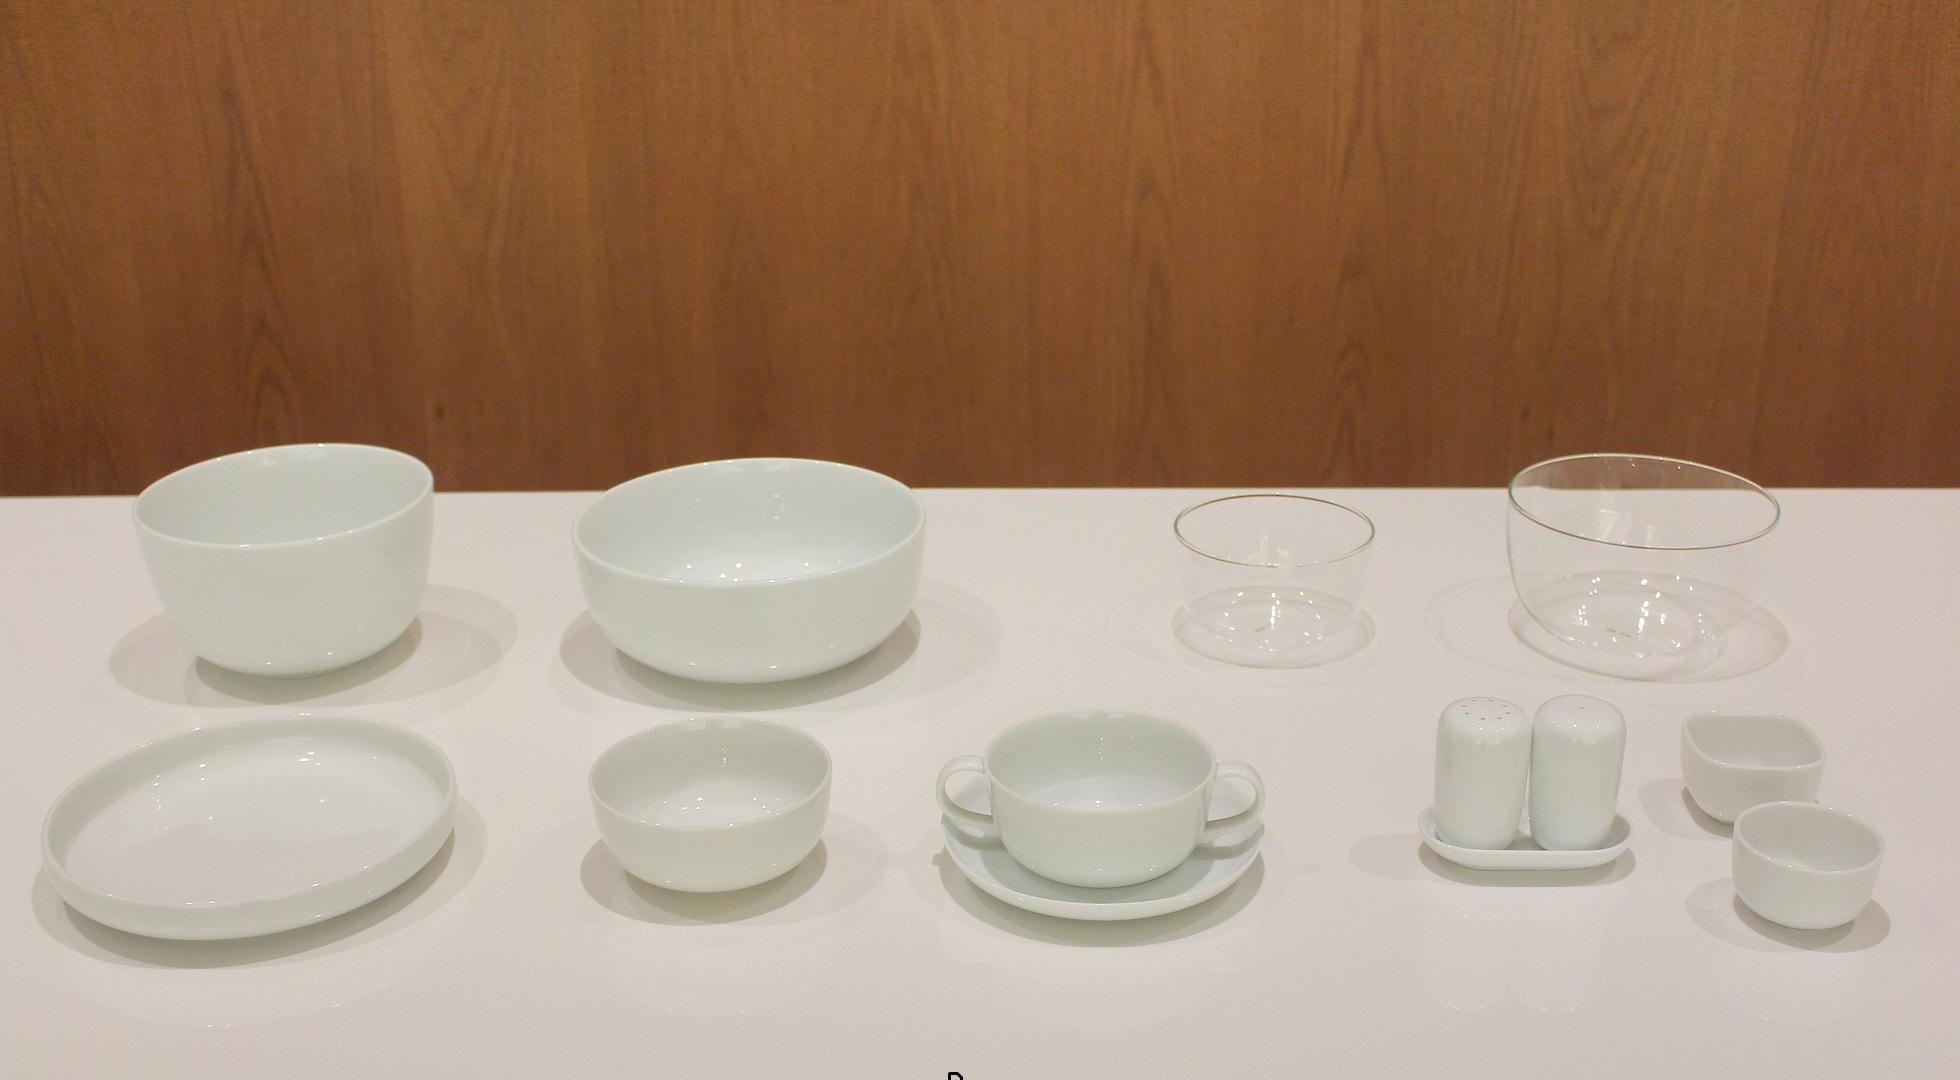  Design selection-Tableware series